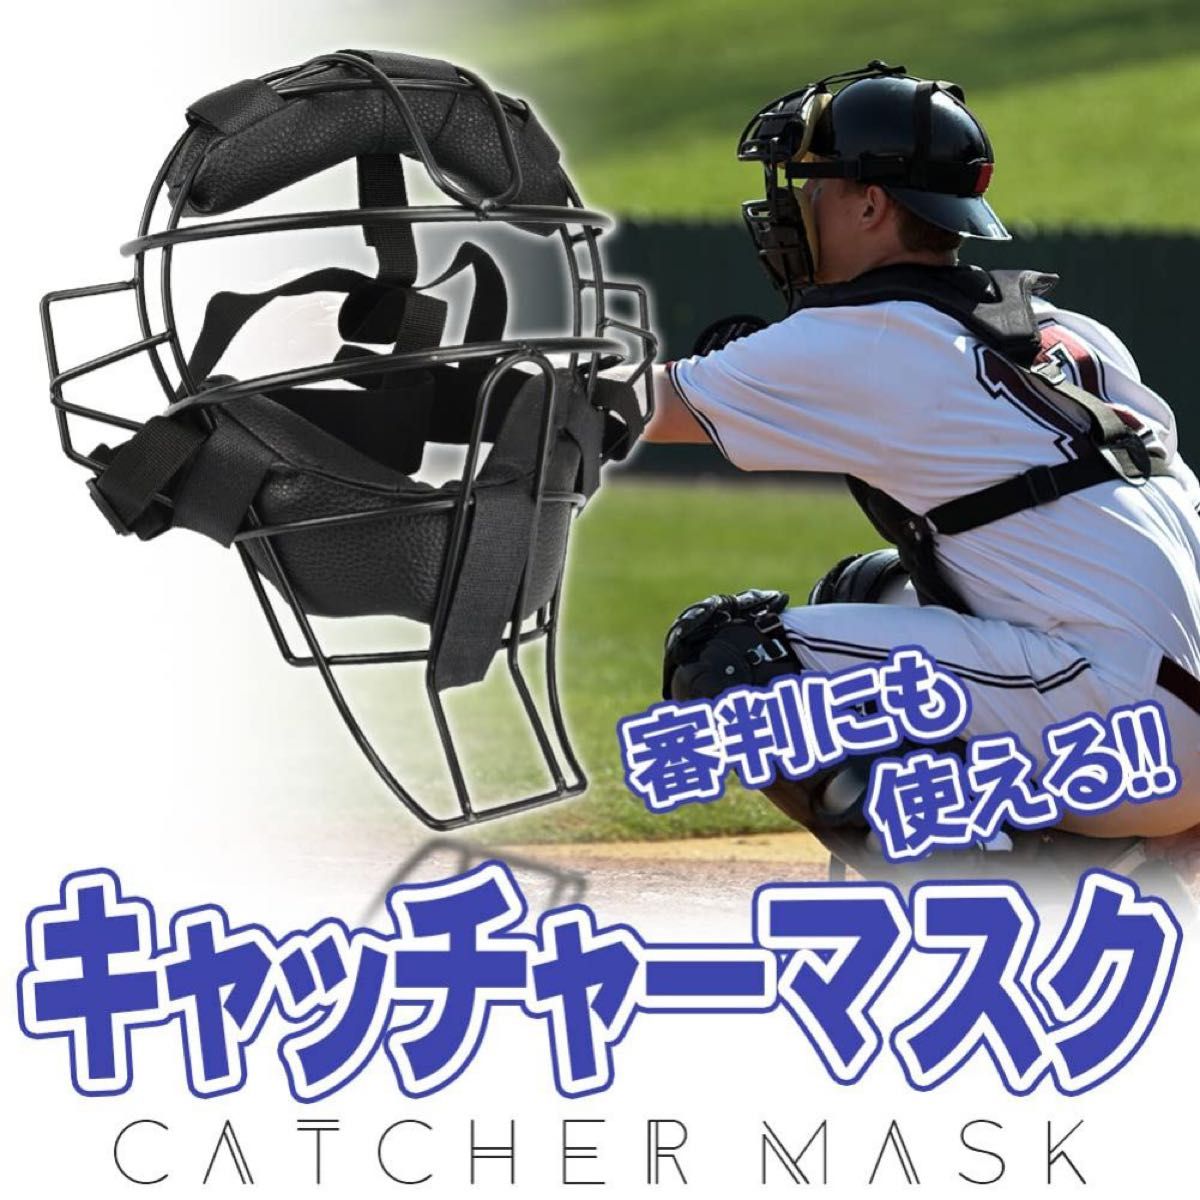 MIZUNO] 少年軟式ソフトボール用マスク 1DJQY230 14 ソフトボール